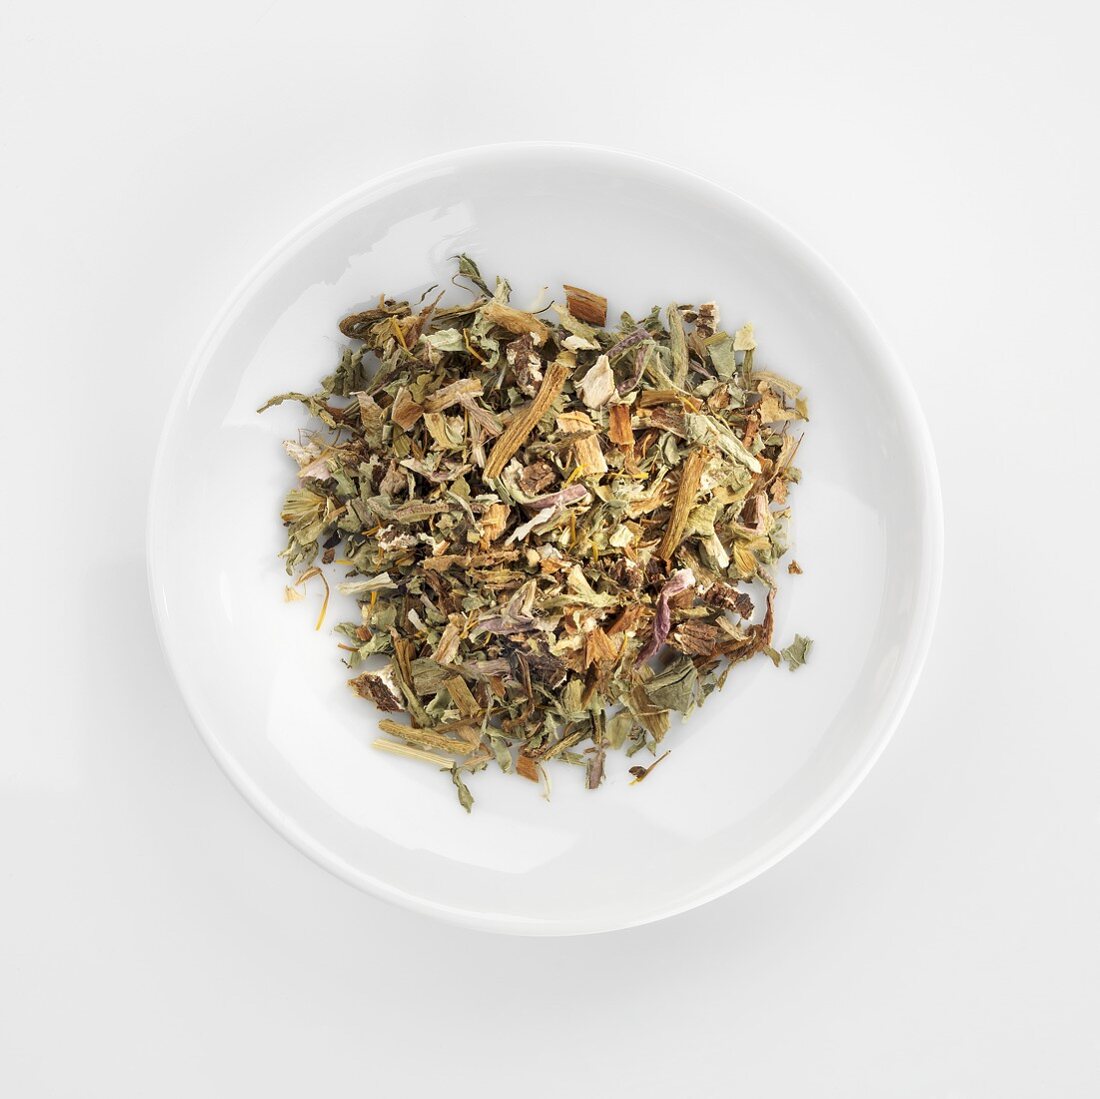 Herbal tea mixture in white dish